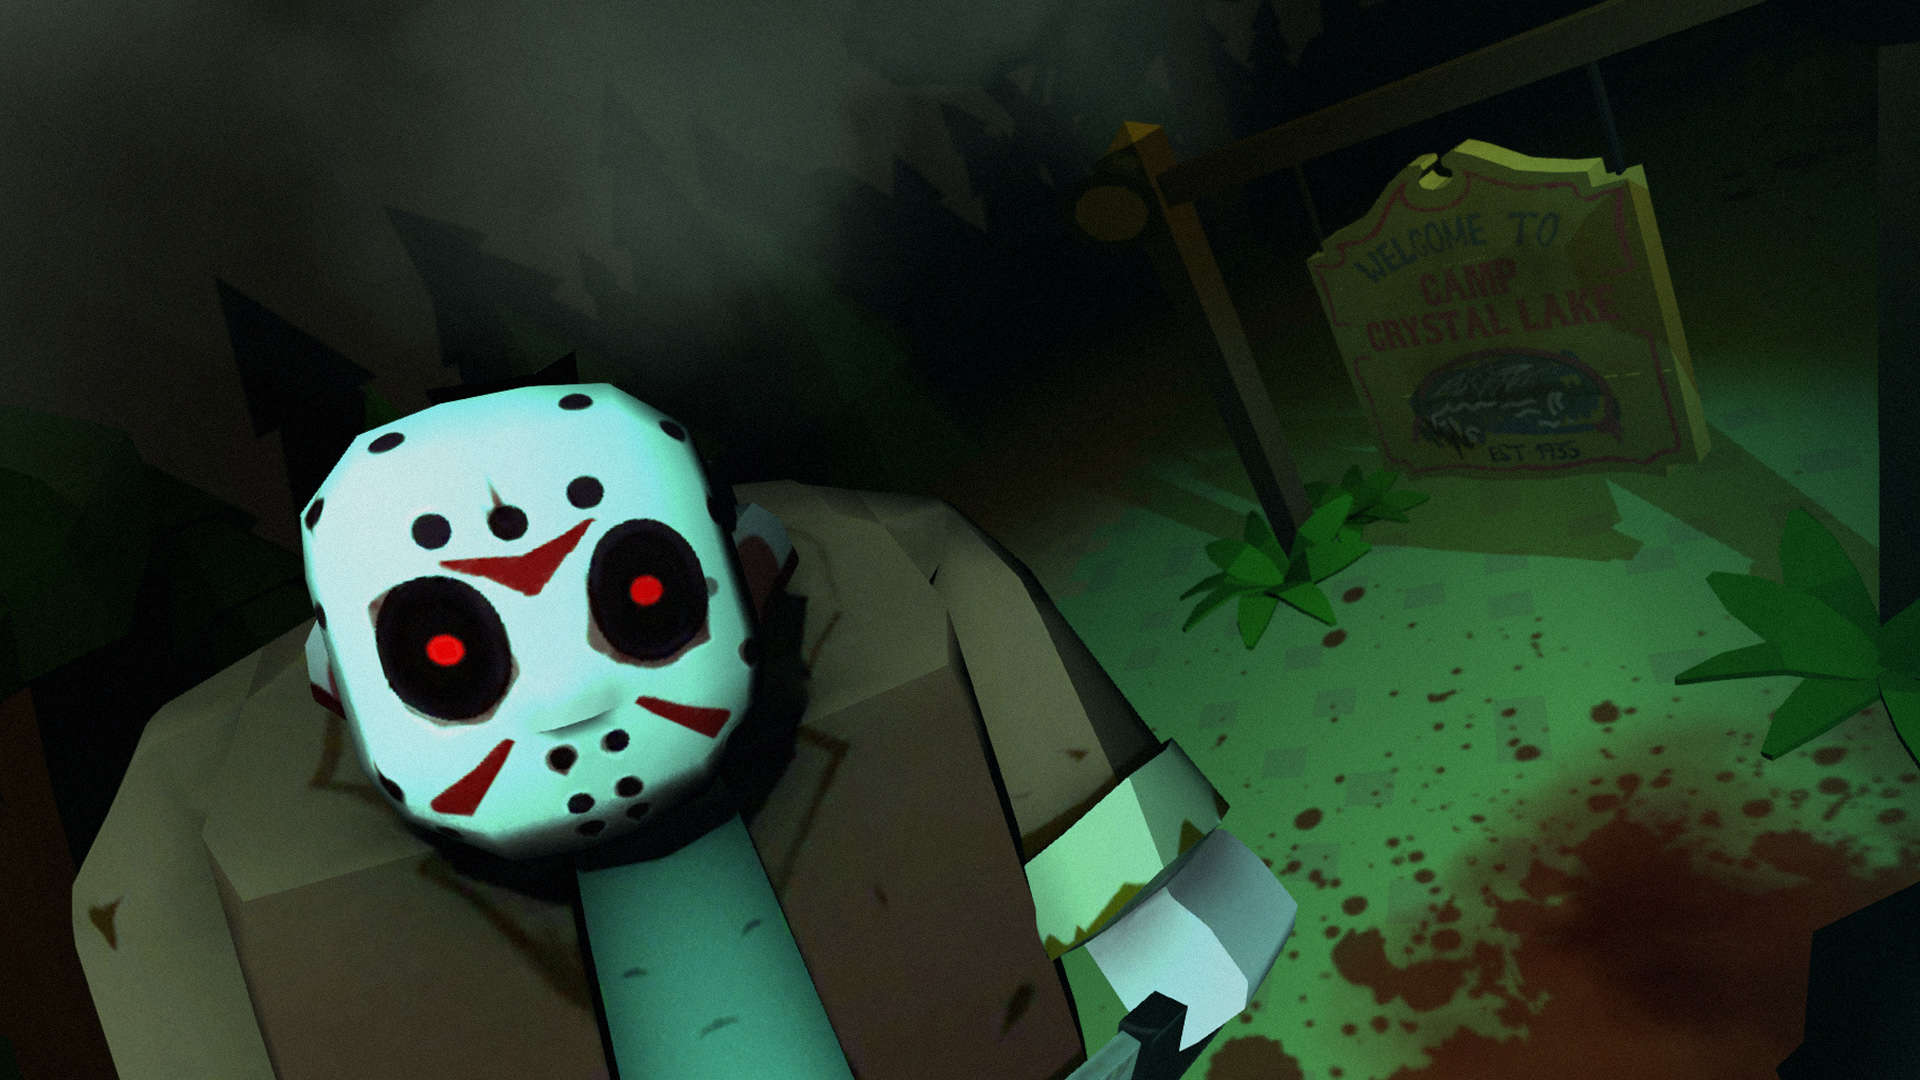 Addictive Mobile Game 'Friday the 13th: Killer Puzzle' Unlocks